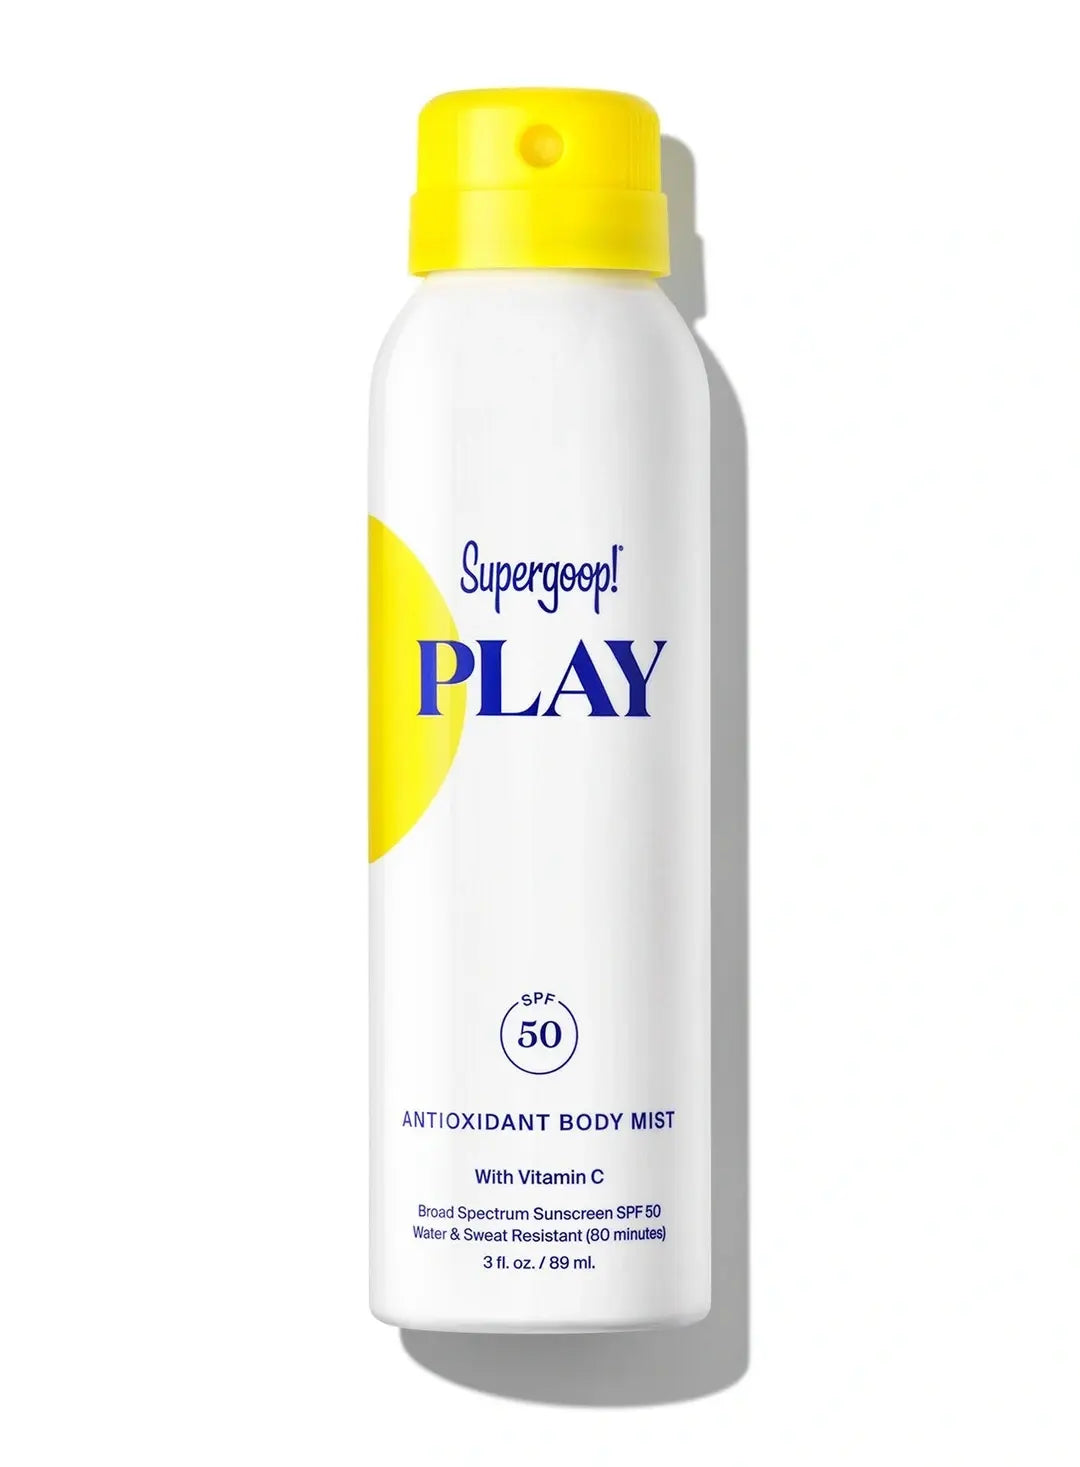 Supergoop! New Play Antioxidant Mist SPF 50 with Vitamin C - travel size